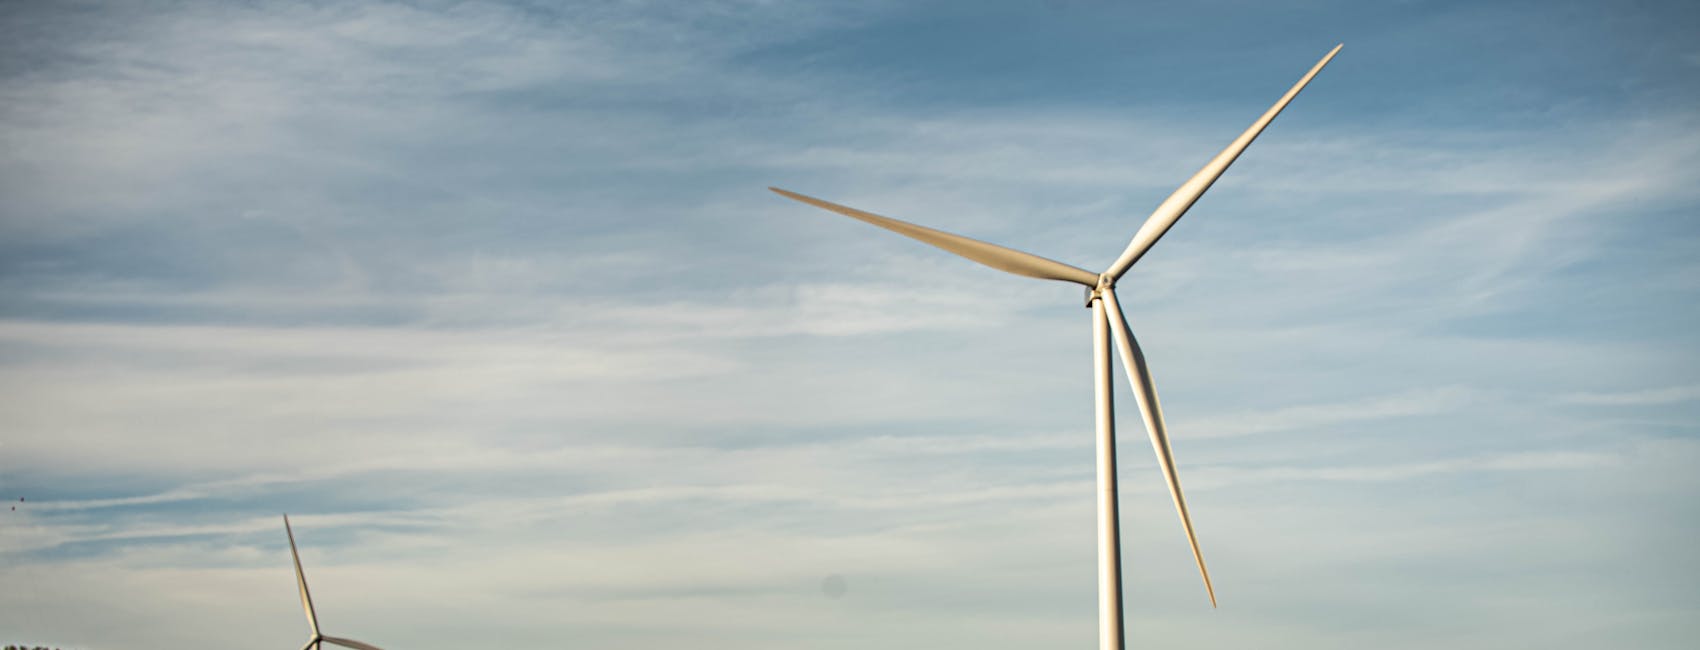 Burchill Wind Energy Project